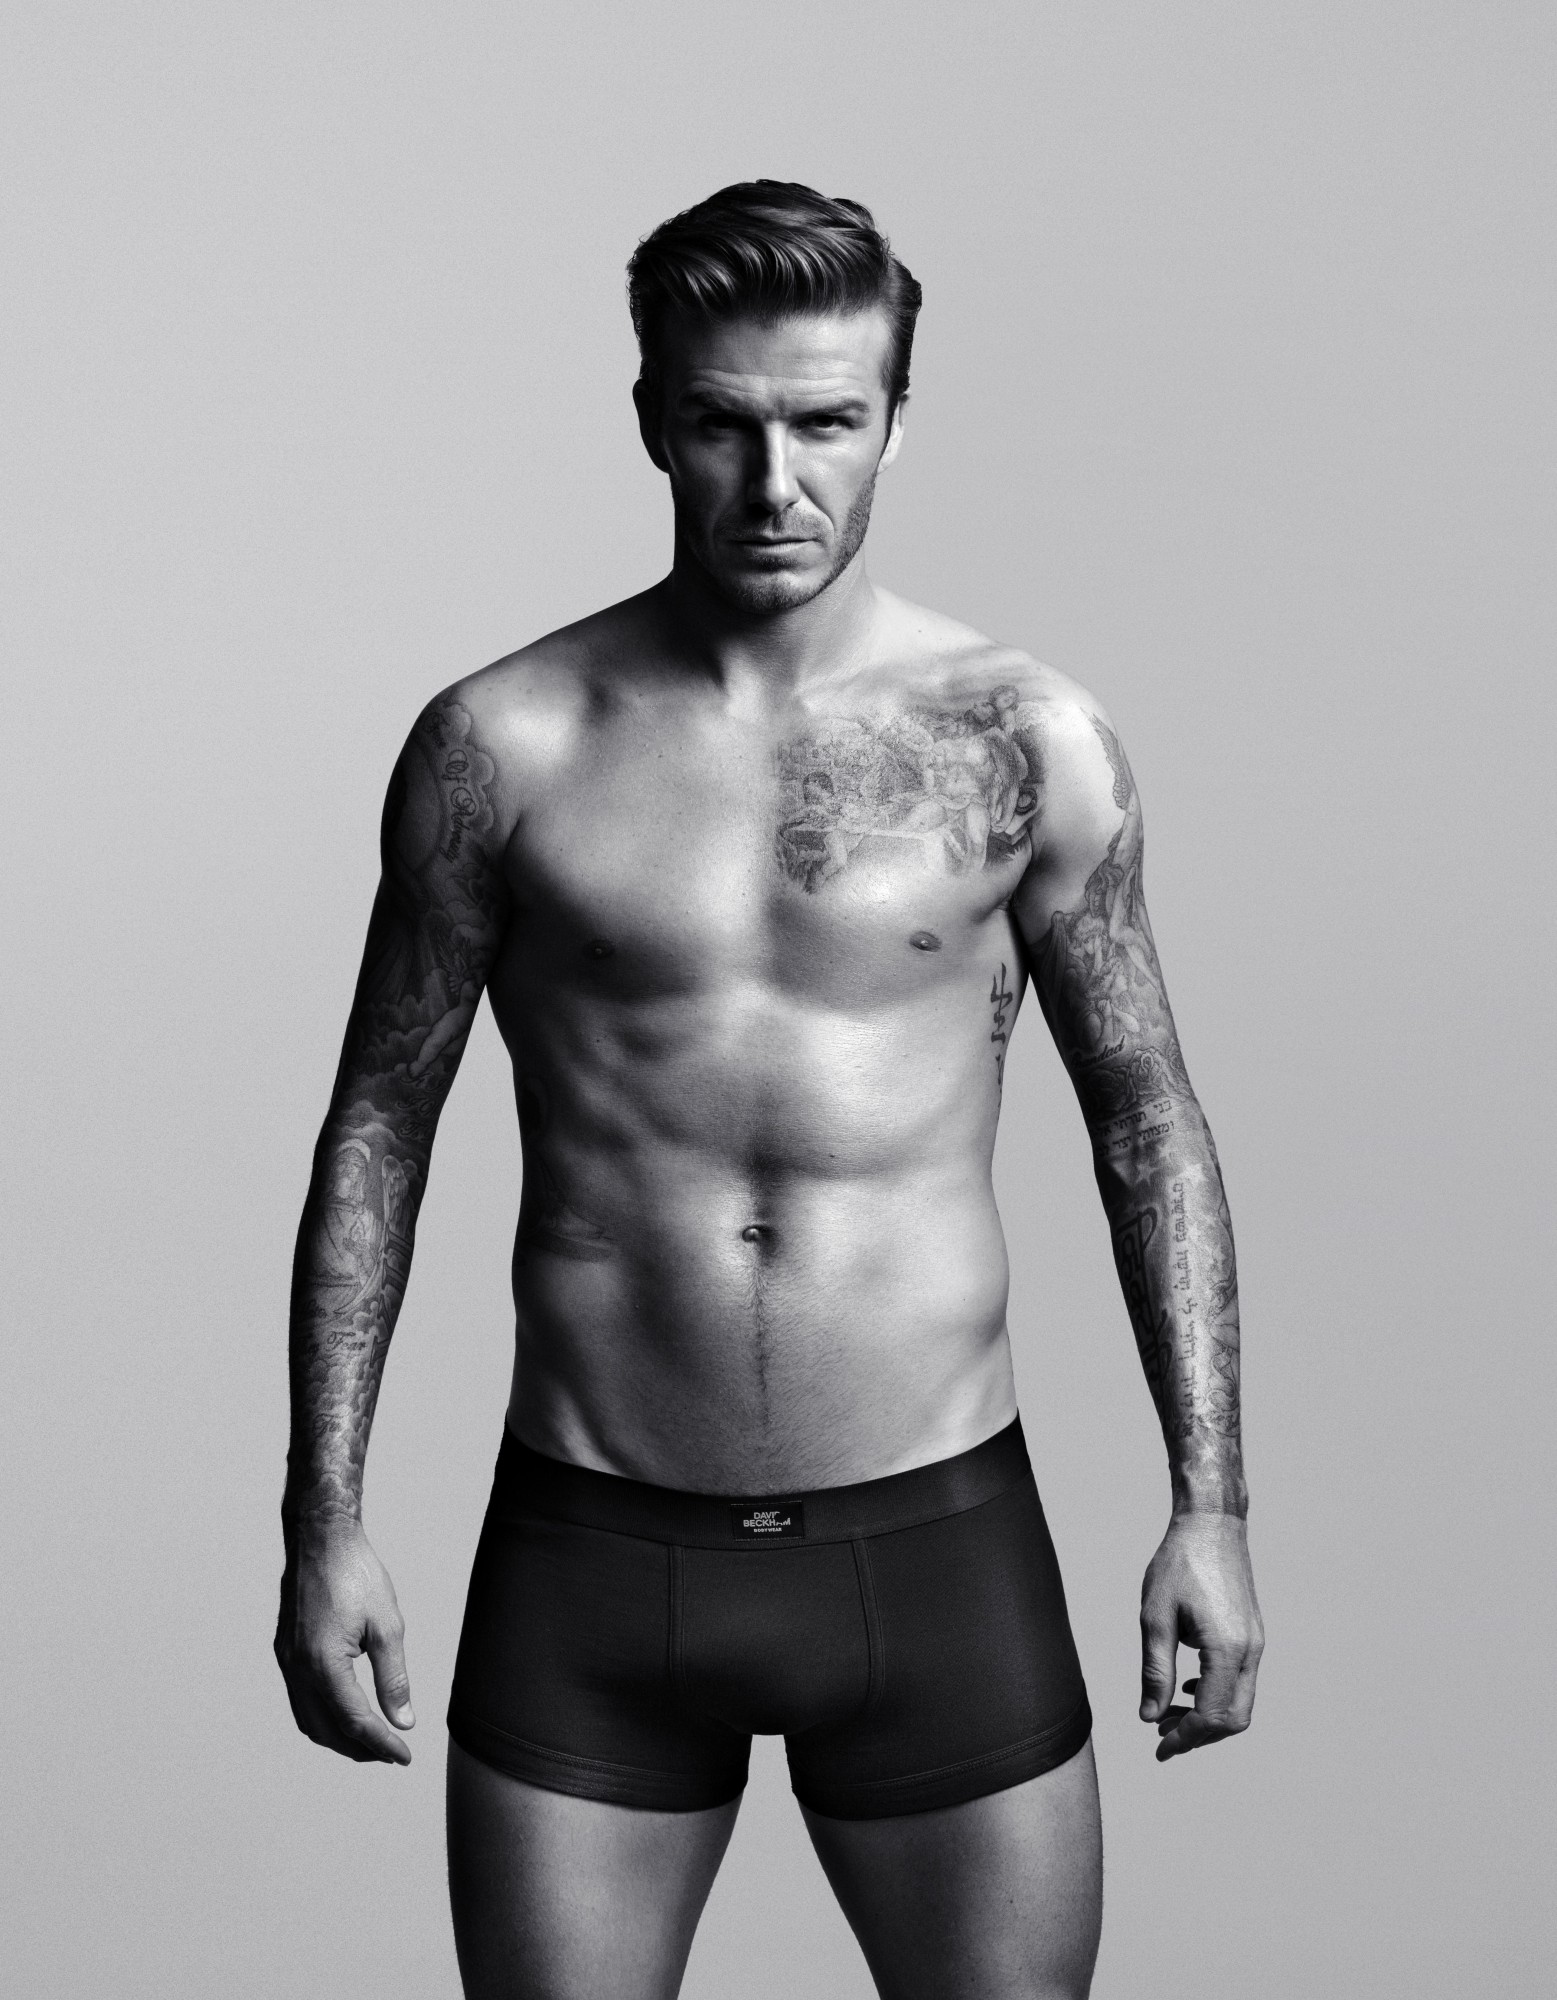 DAVID BECKHAM Bodywear collection for H&M photos, H&M David Beckham Super Bowl ad, Super Bowl commercial